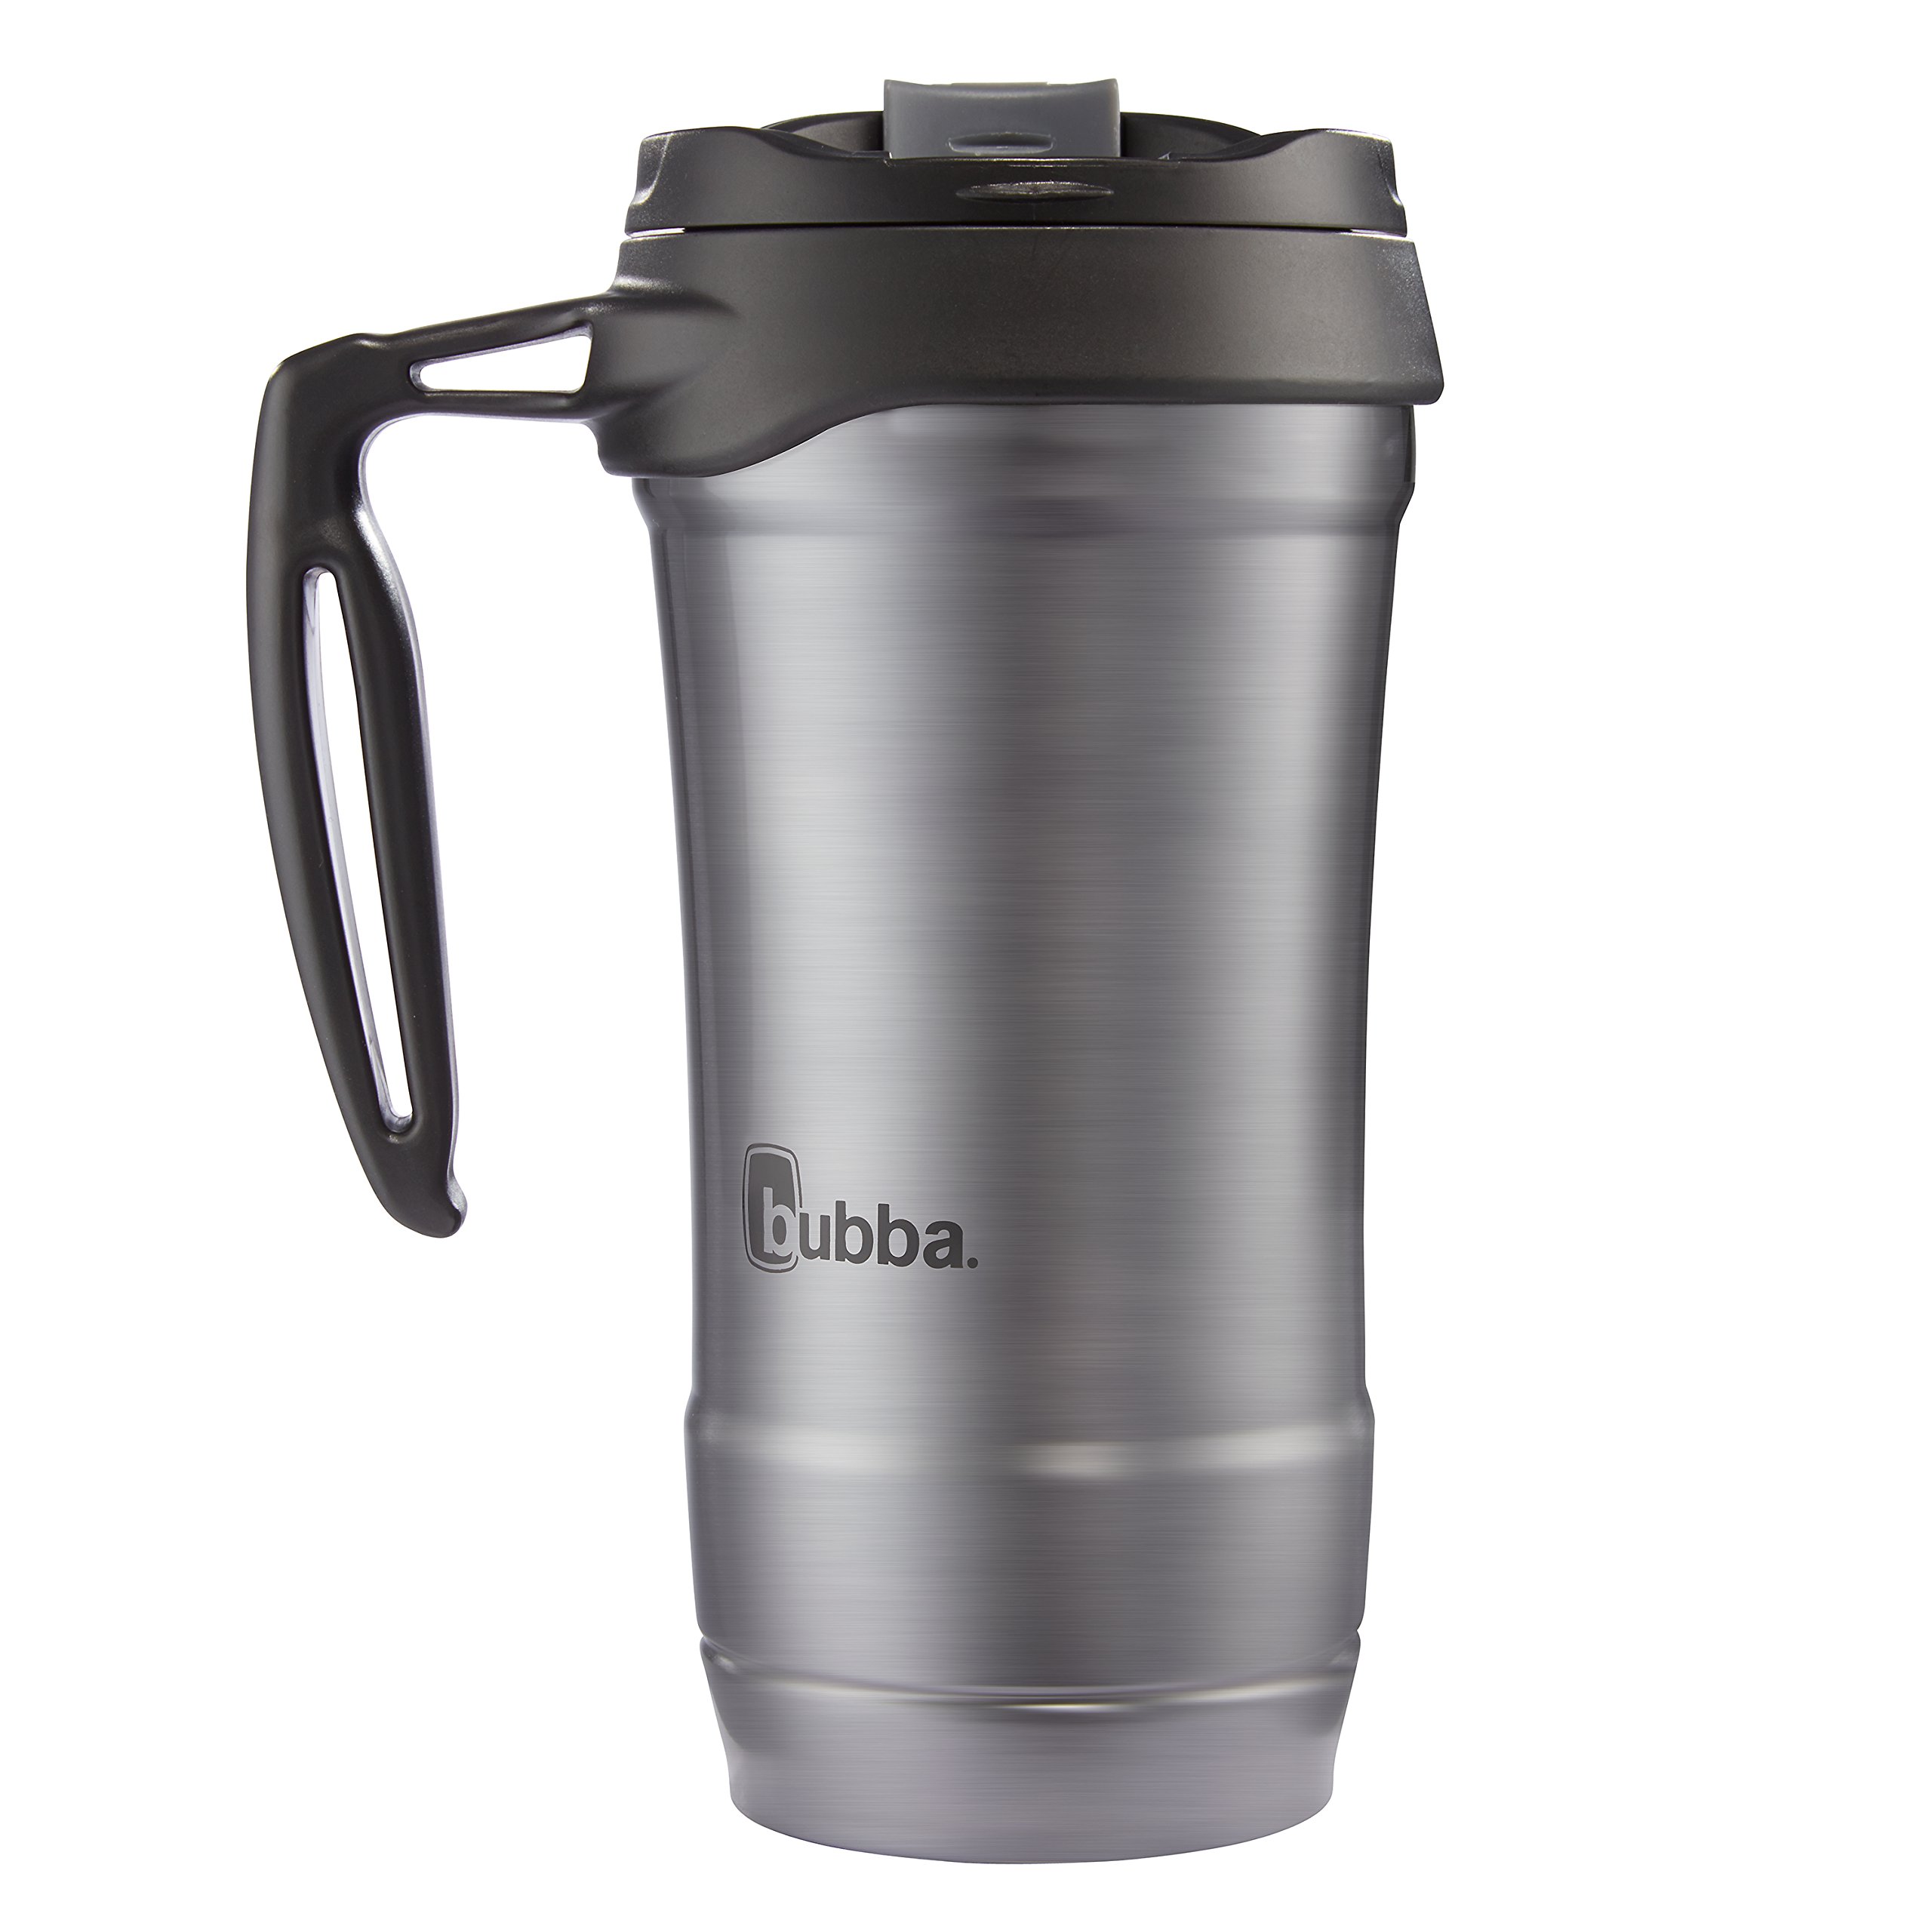 Bubba Hero XL Vacuum-Insulated Stainless Steel Travel Mug (18oz) and Bubba Classic Insulated Mug (52oz)